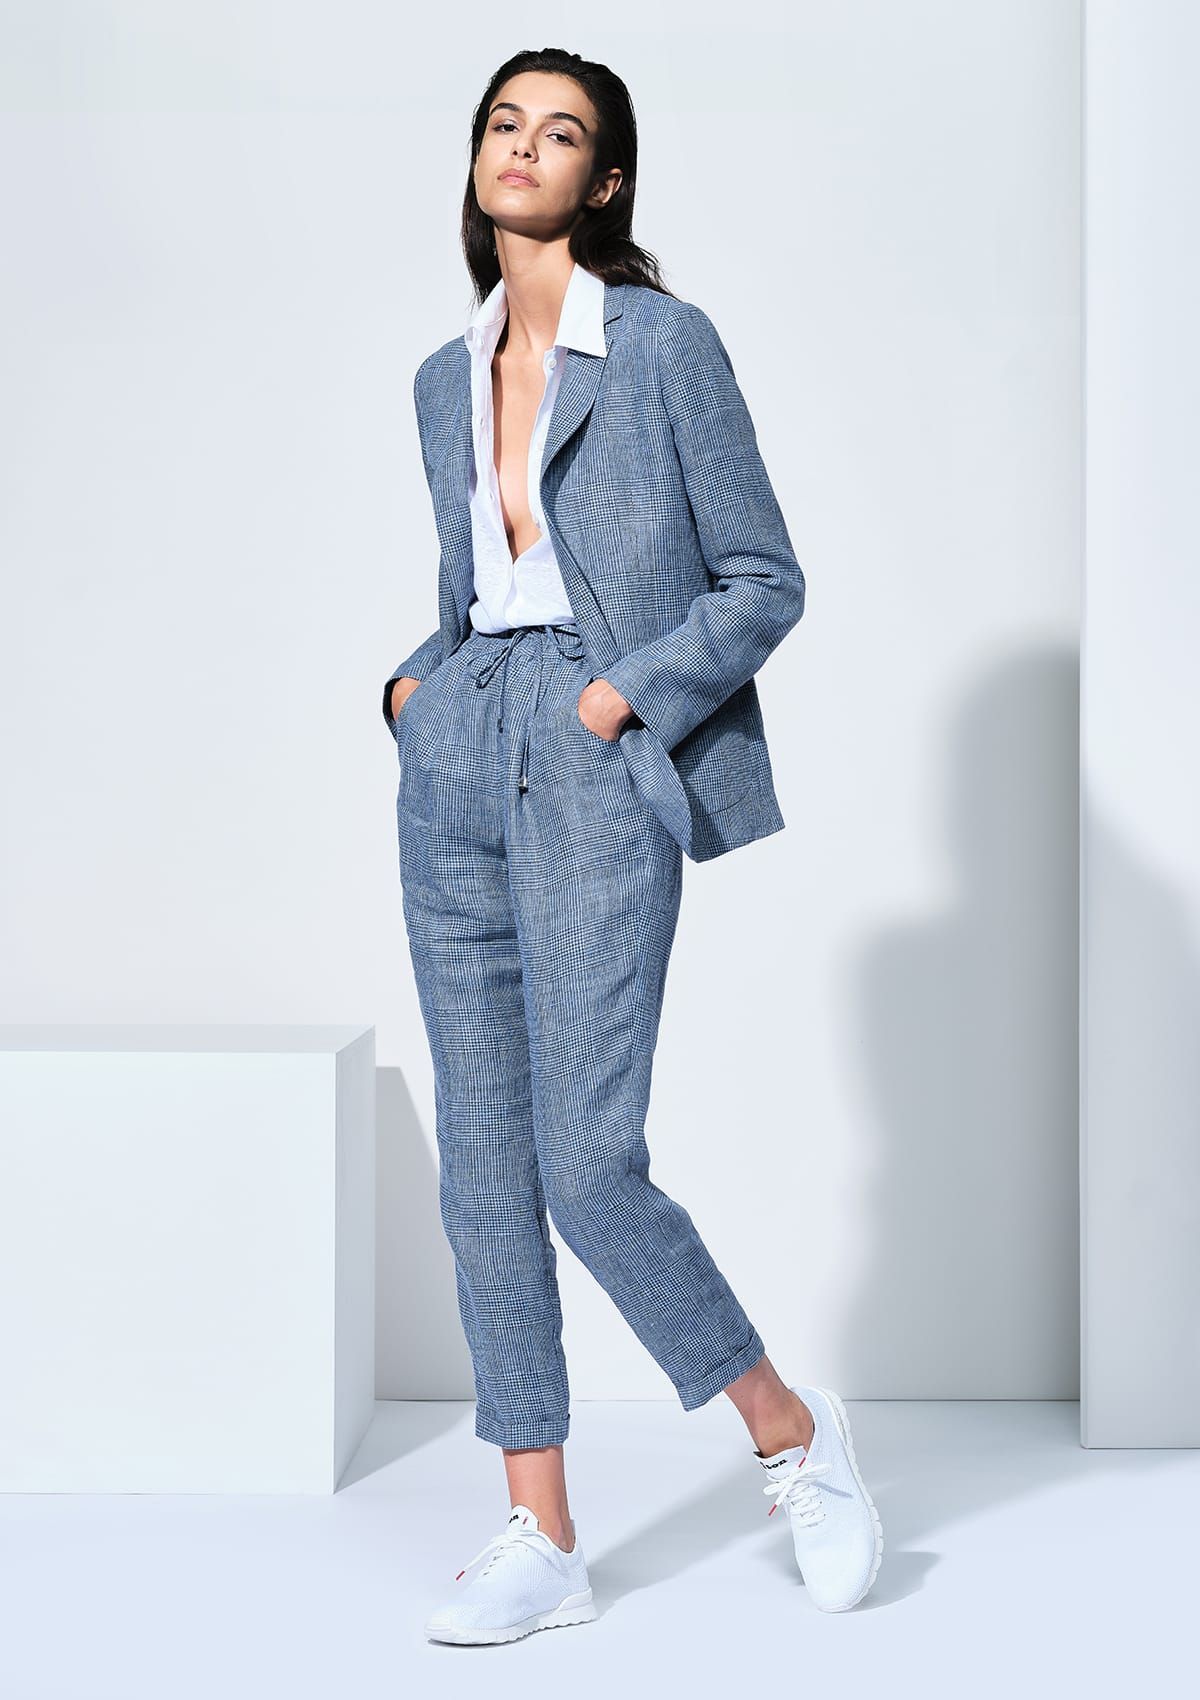 Trends Office Wear For Ladies 2021 - meandastranger